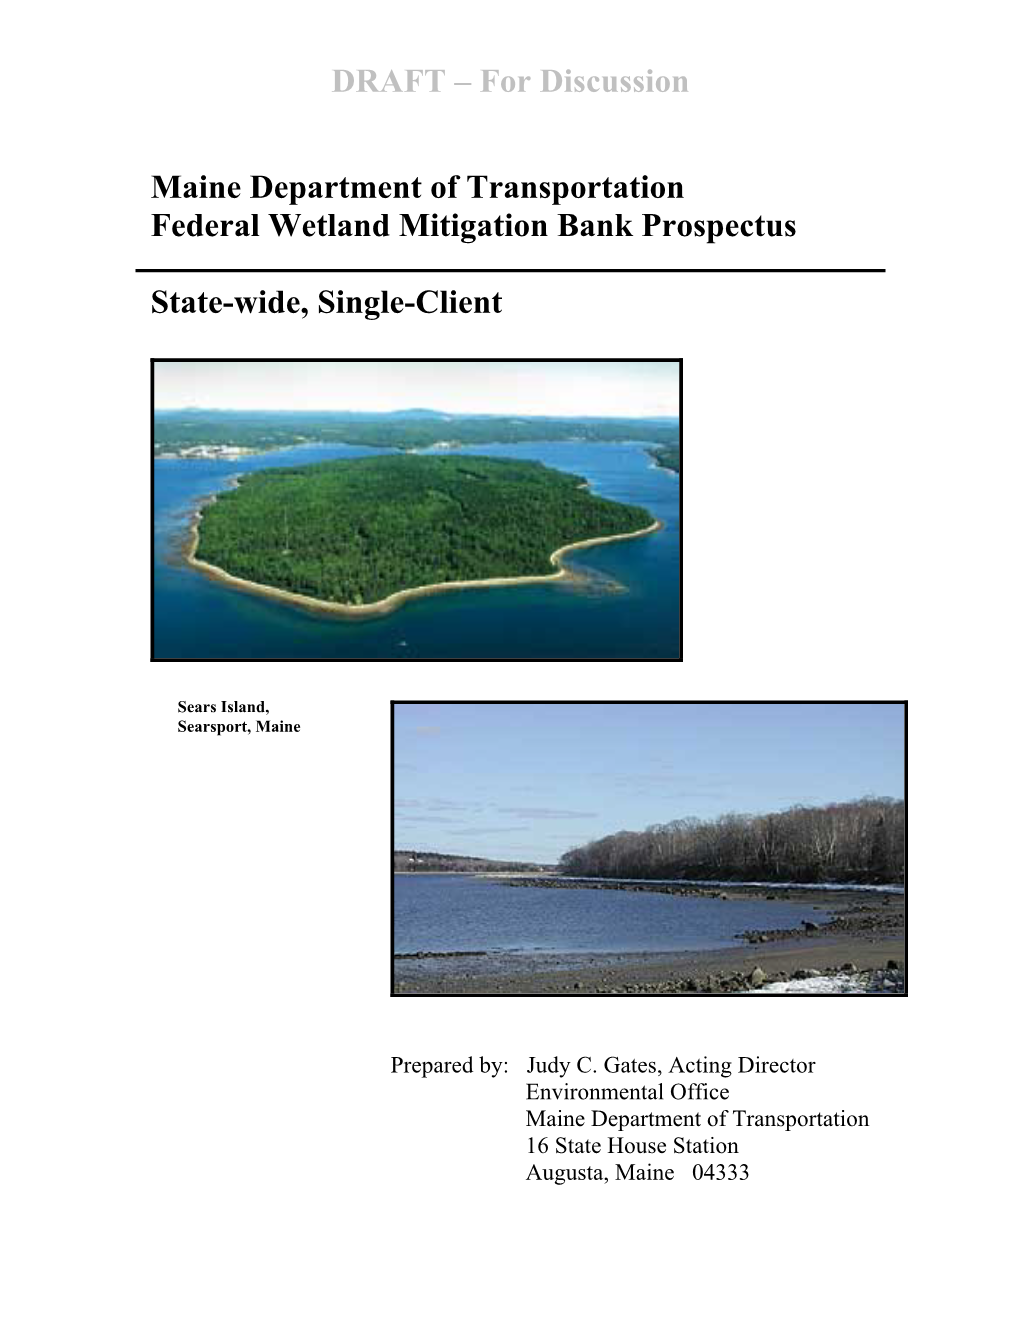 Read the Maine DOT Prospectus for Sears Island